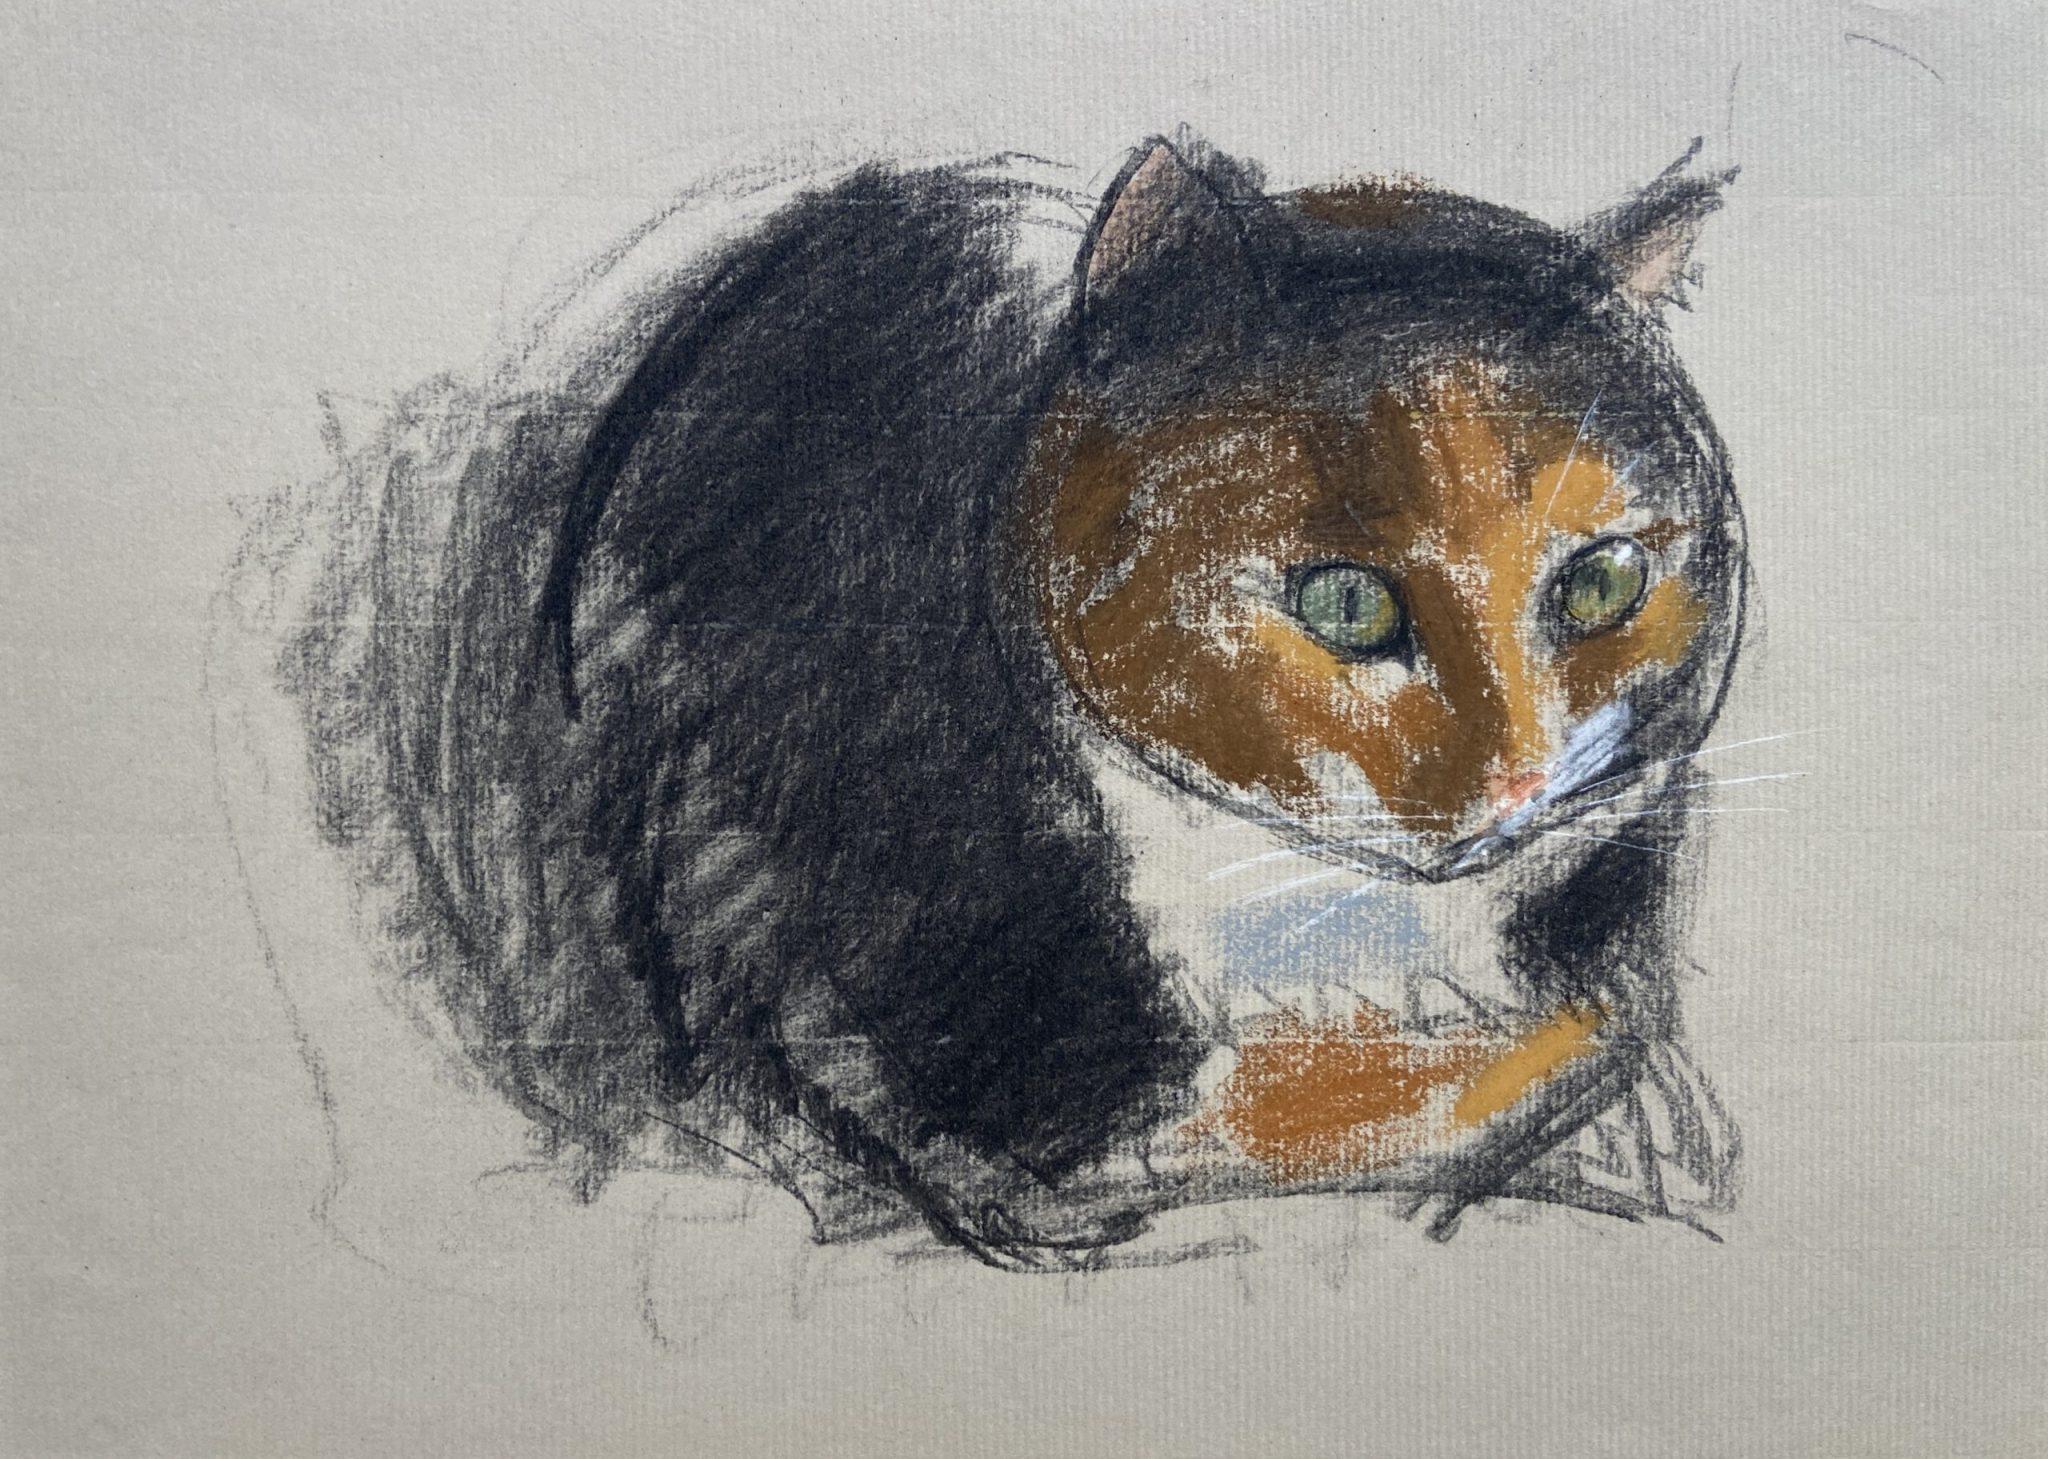 John Sergeant Animal Art - Cat Studies, 20th Century British Animal Drawings